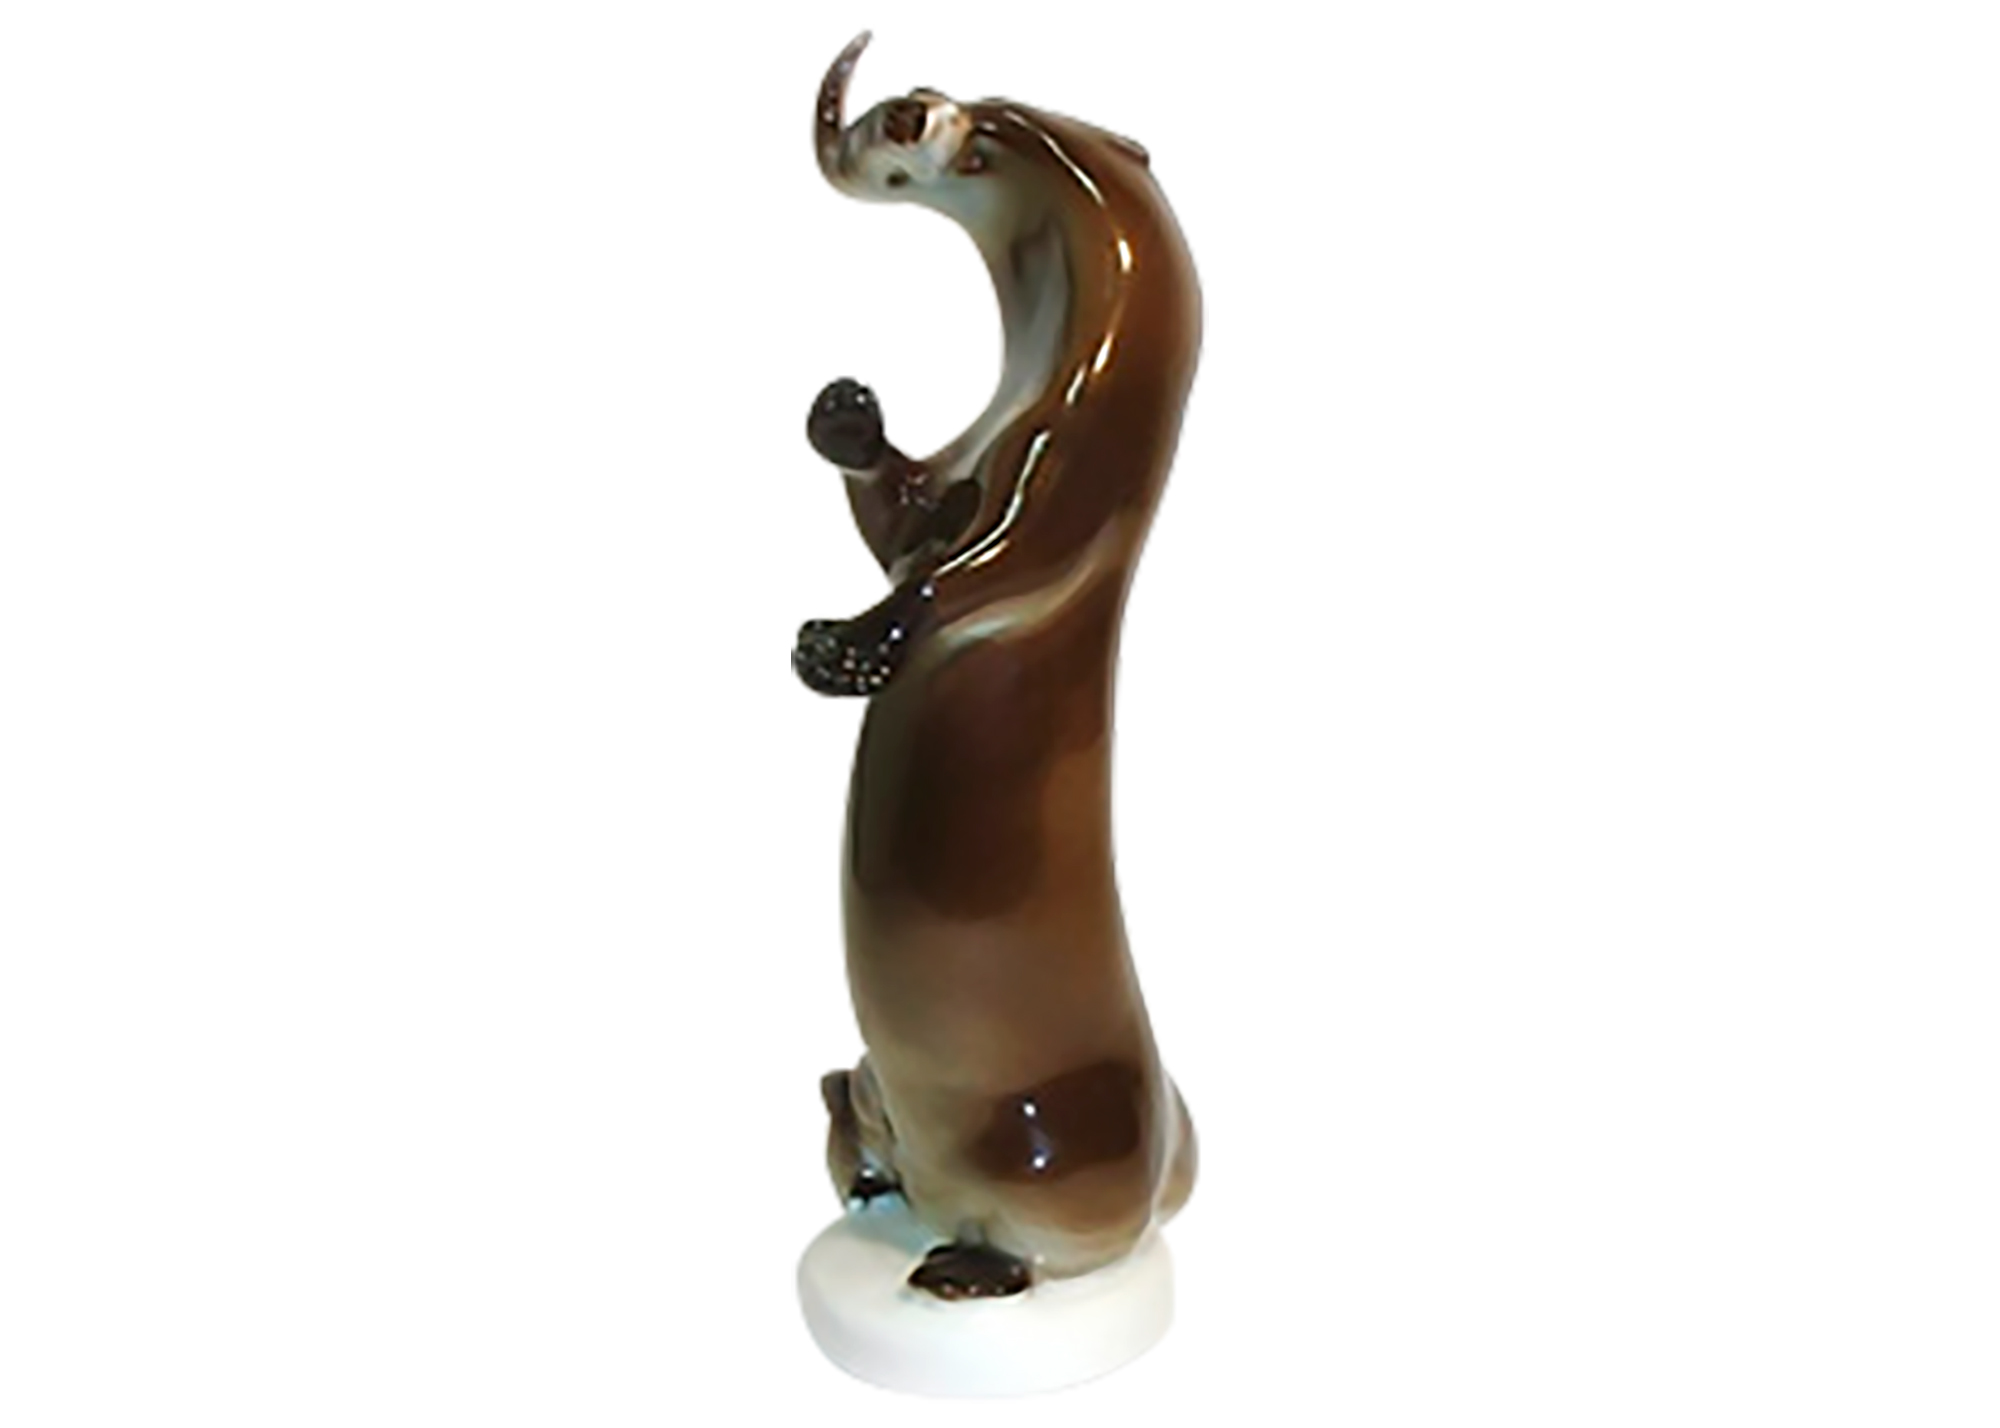 Buy Marine Otter Figurine at GoldenCockerel.com